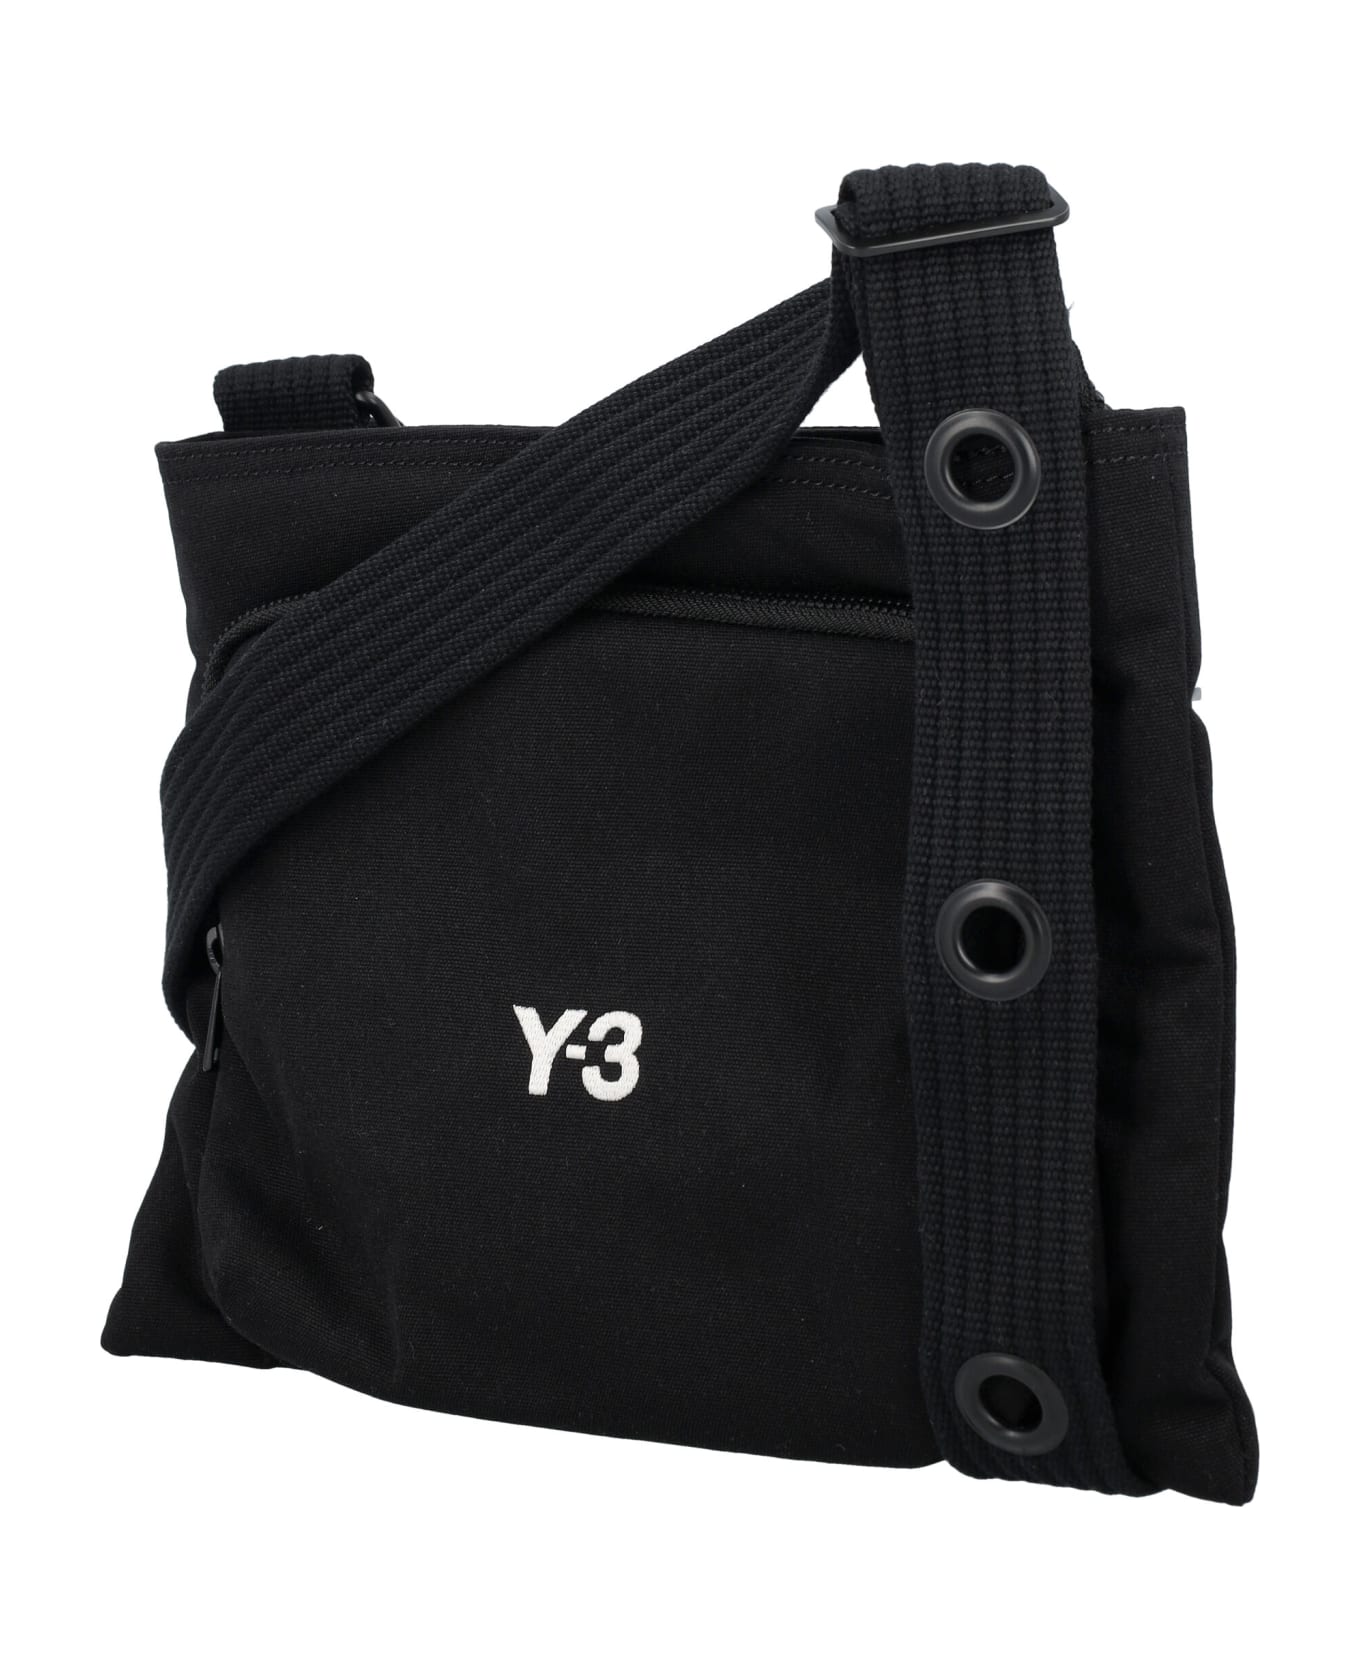 Y-3 Crossbody Bag - BLACK ショルダーバッグ